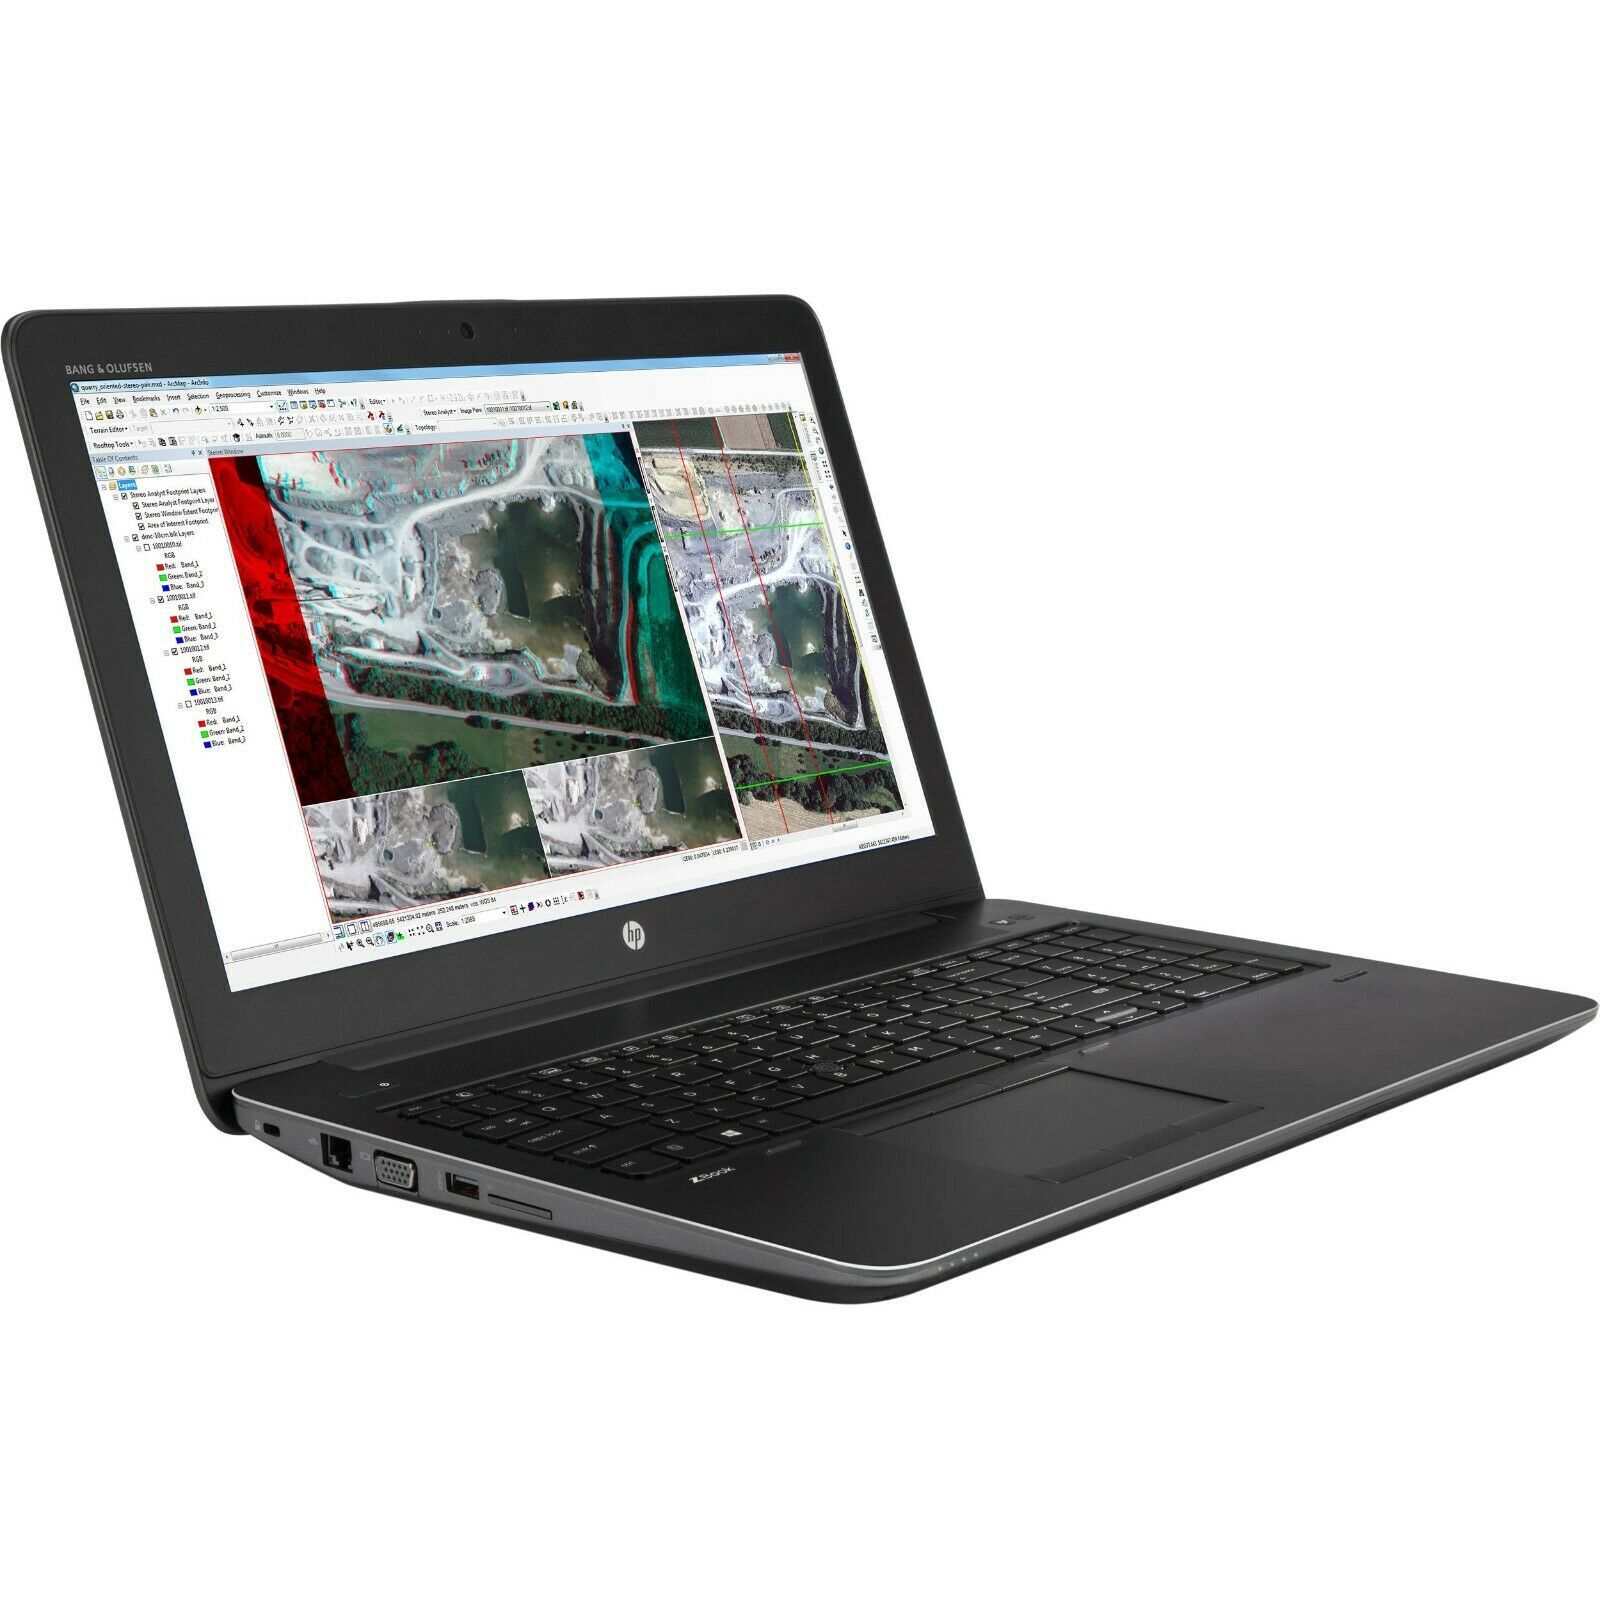 HP Zbook 15 G3 Intel i7 6700HQ 2.90Ghz 16GB RAM 320GB HDD 15.6" FHD Win 10 Full Size Image